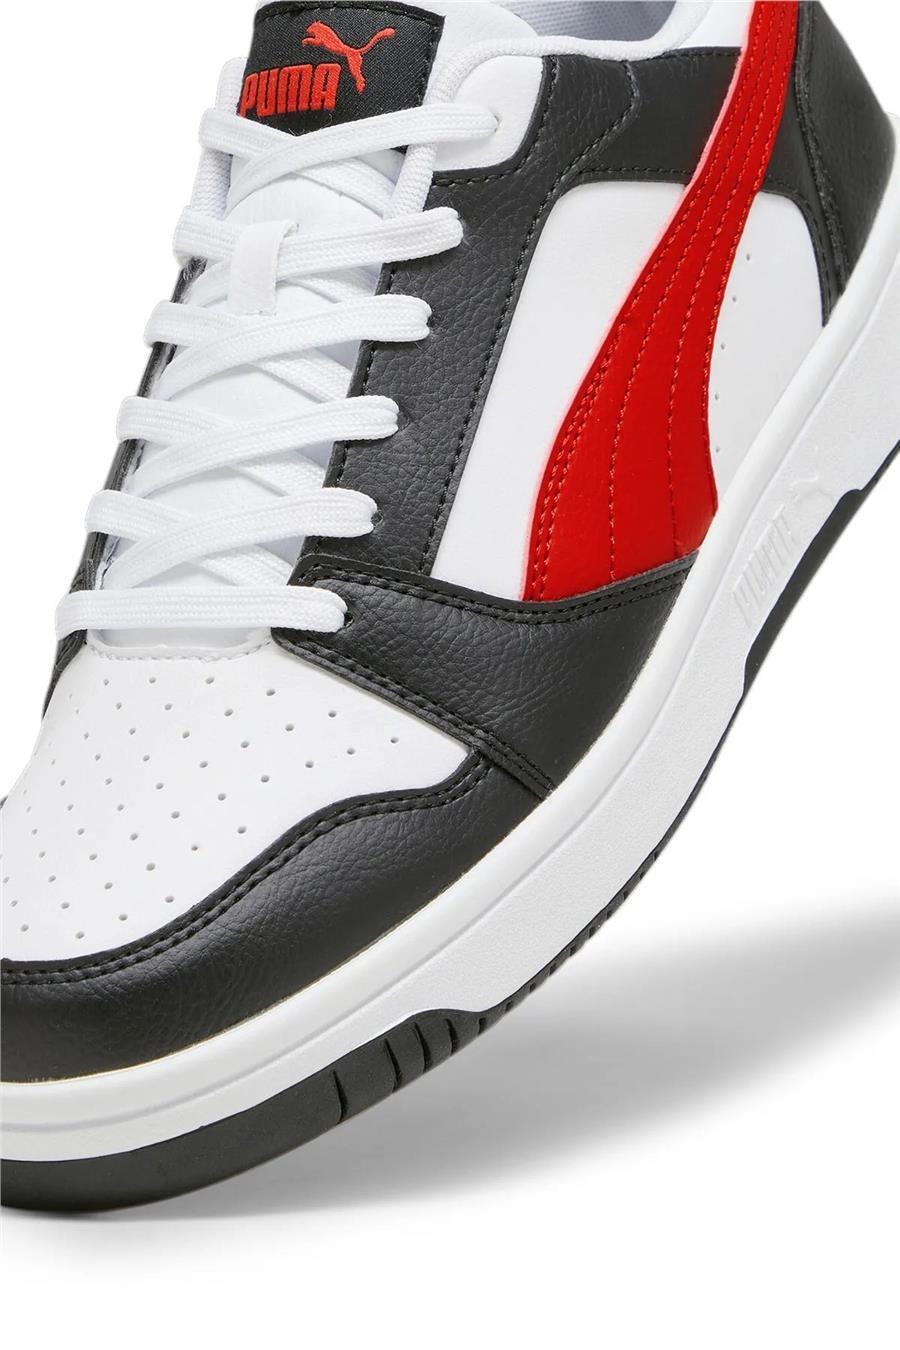 Puma 392328 04 Rebound V6 Low Puma White-For All Time Red-Puma Black  Yetişkin Erkek Sneaker Ayakkabısı